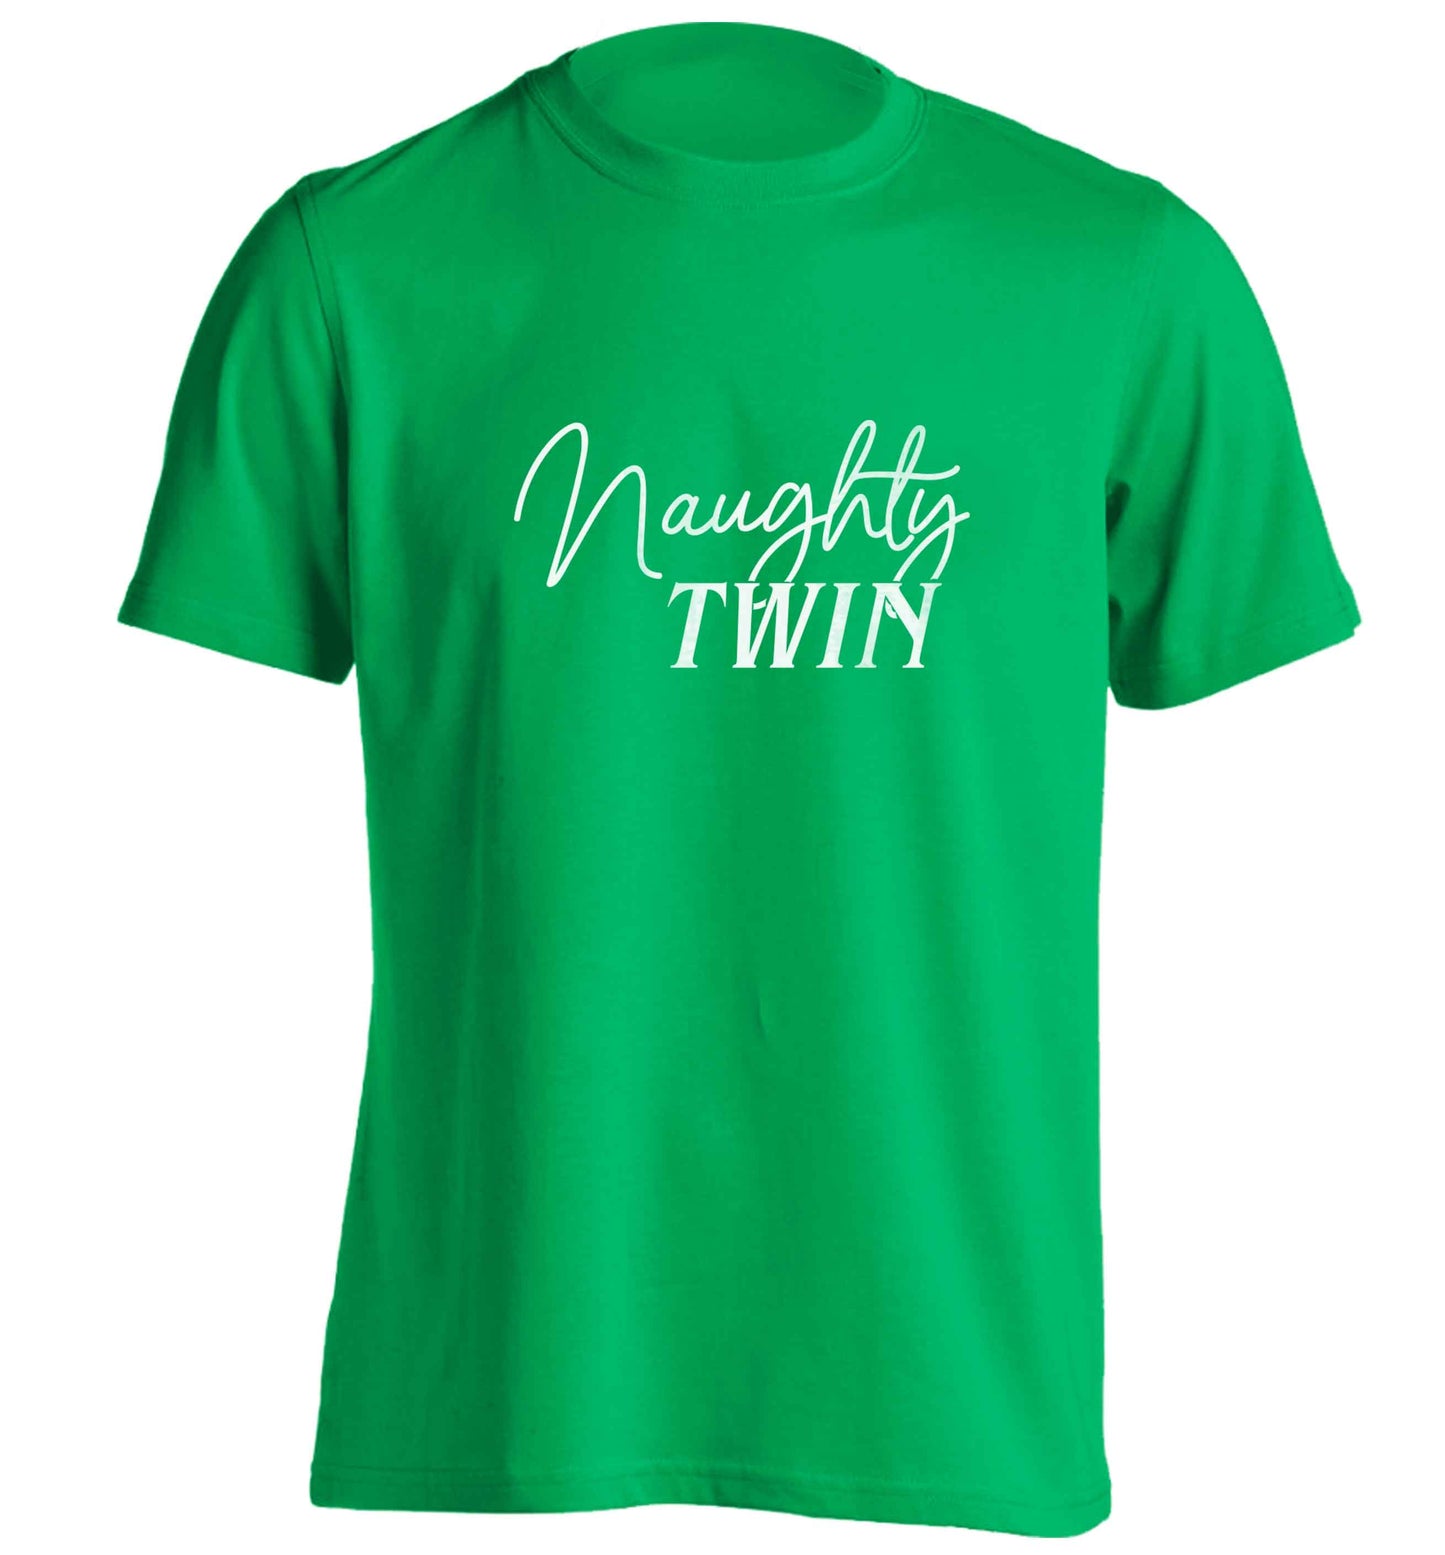 Naughty twin adults unisex green Tshirt 2XL